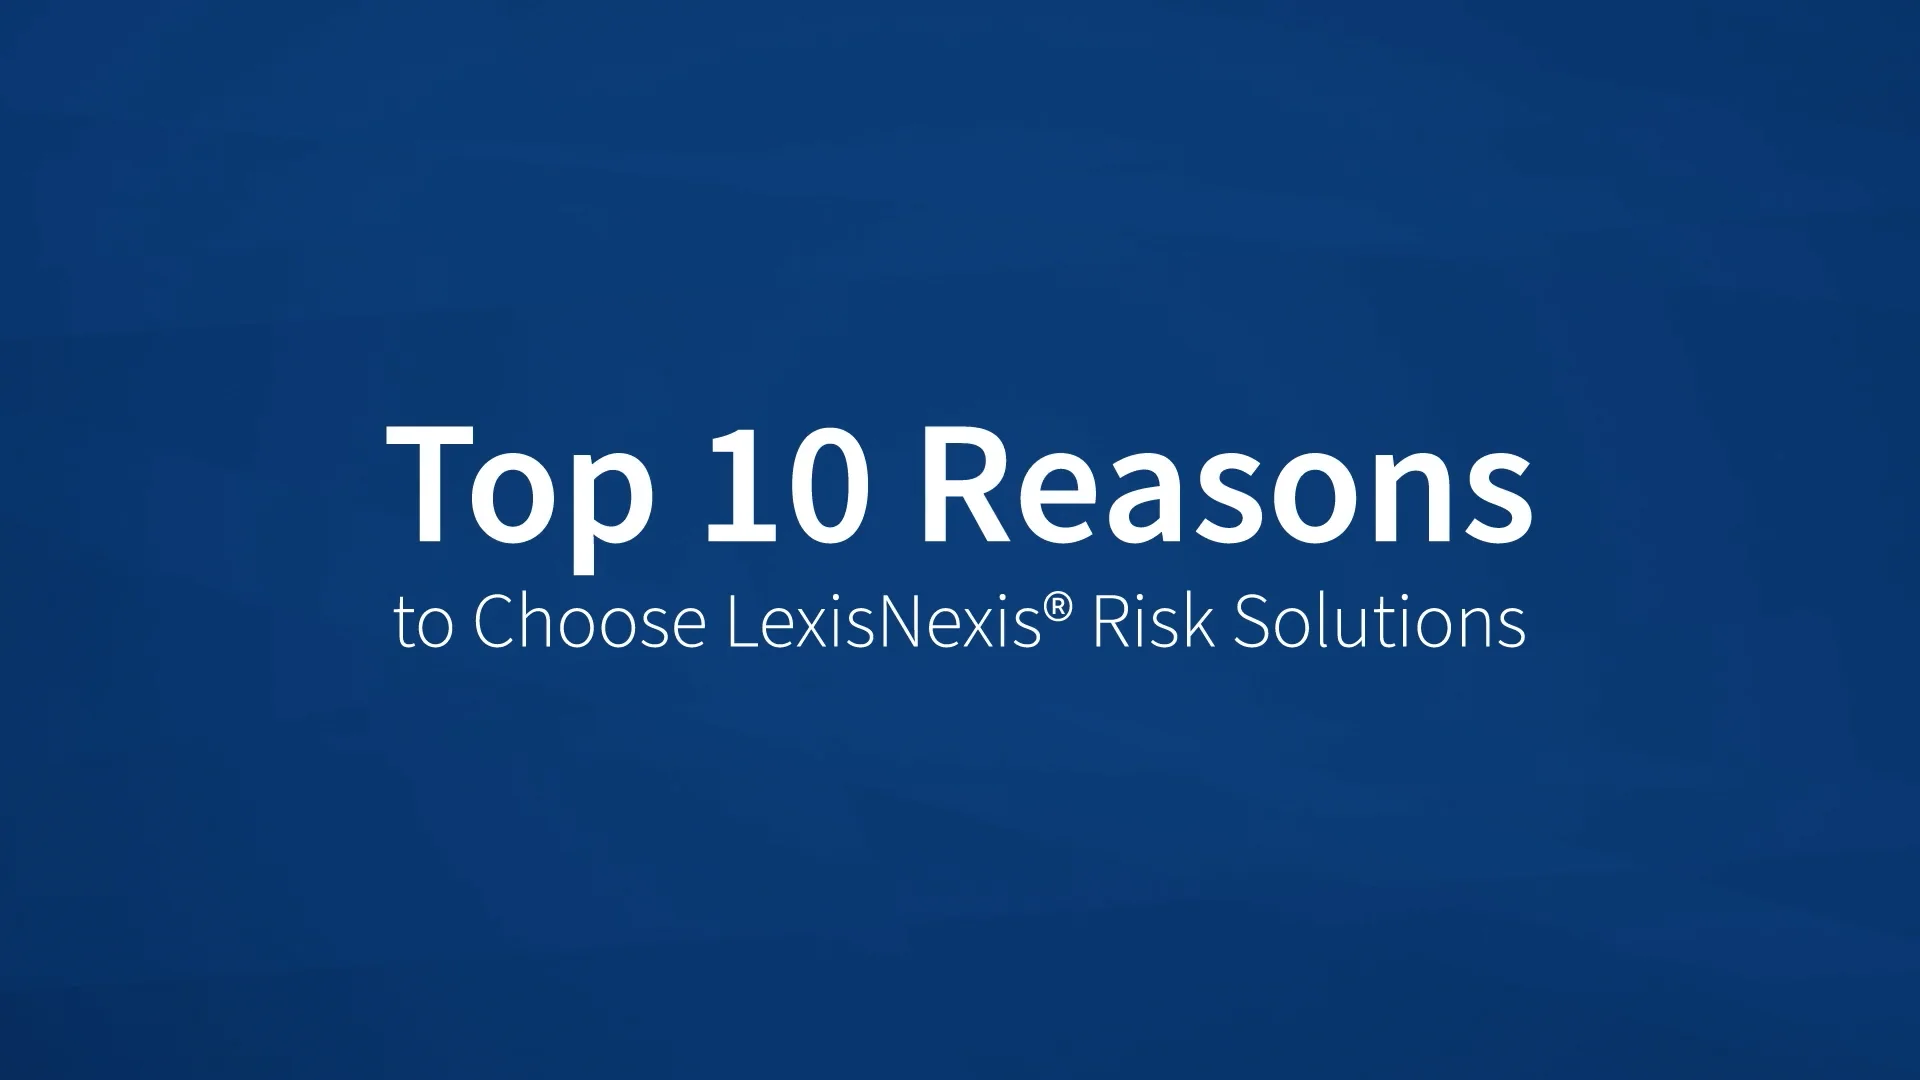 Top 10 reasons